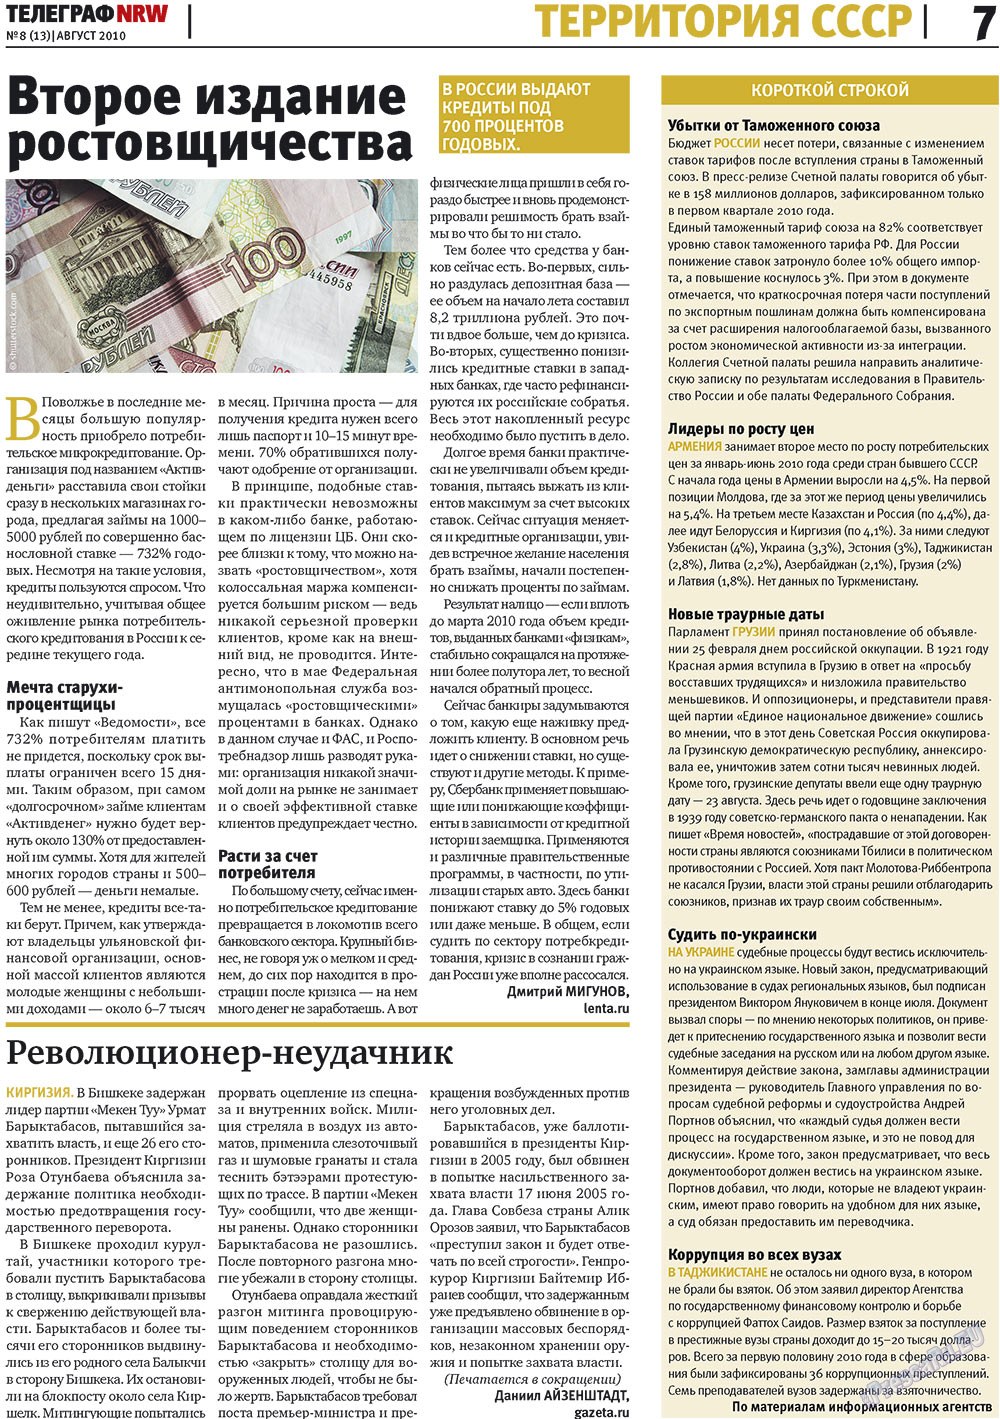 Телеграф NRW, газета. 2010 №8 стр.7